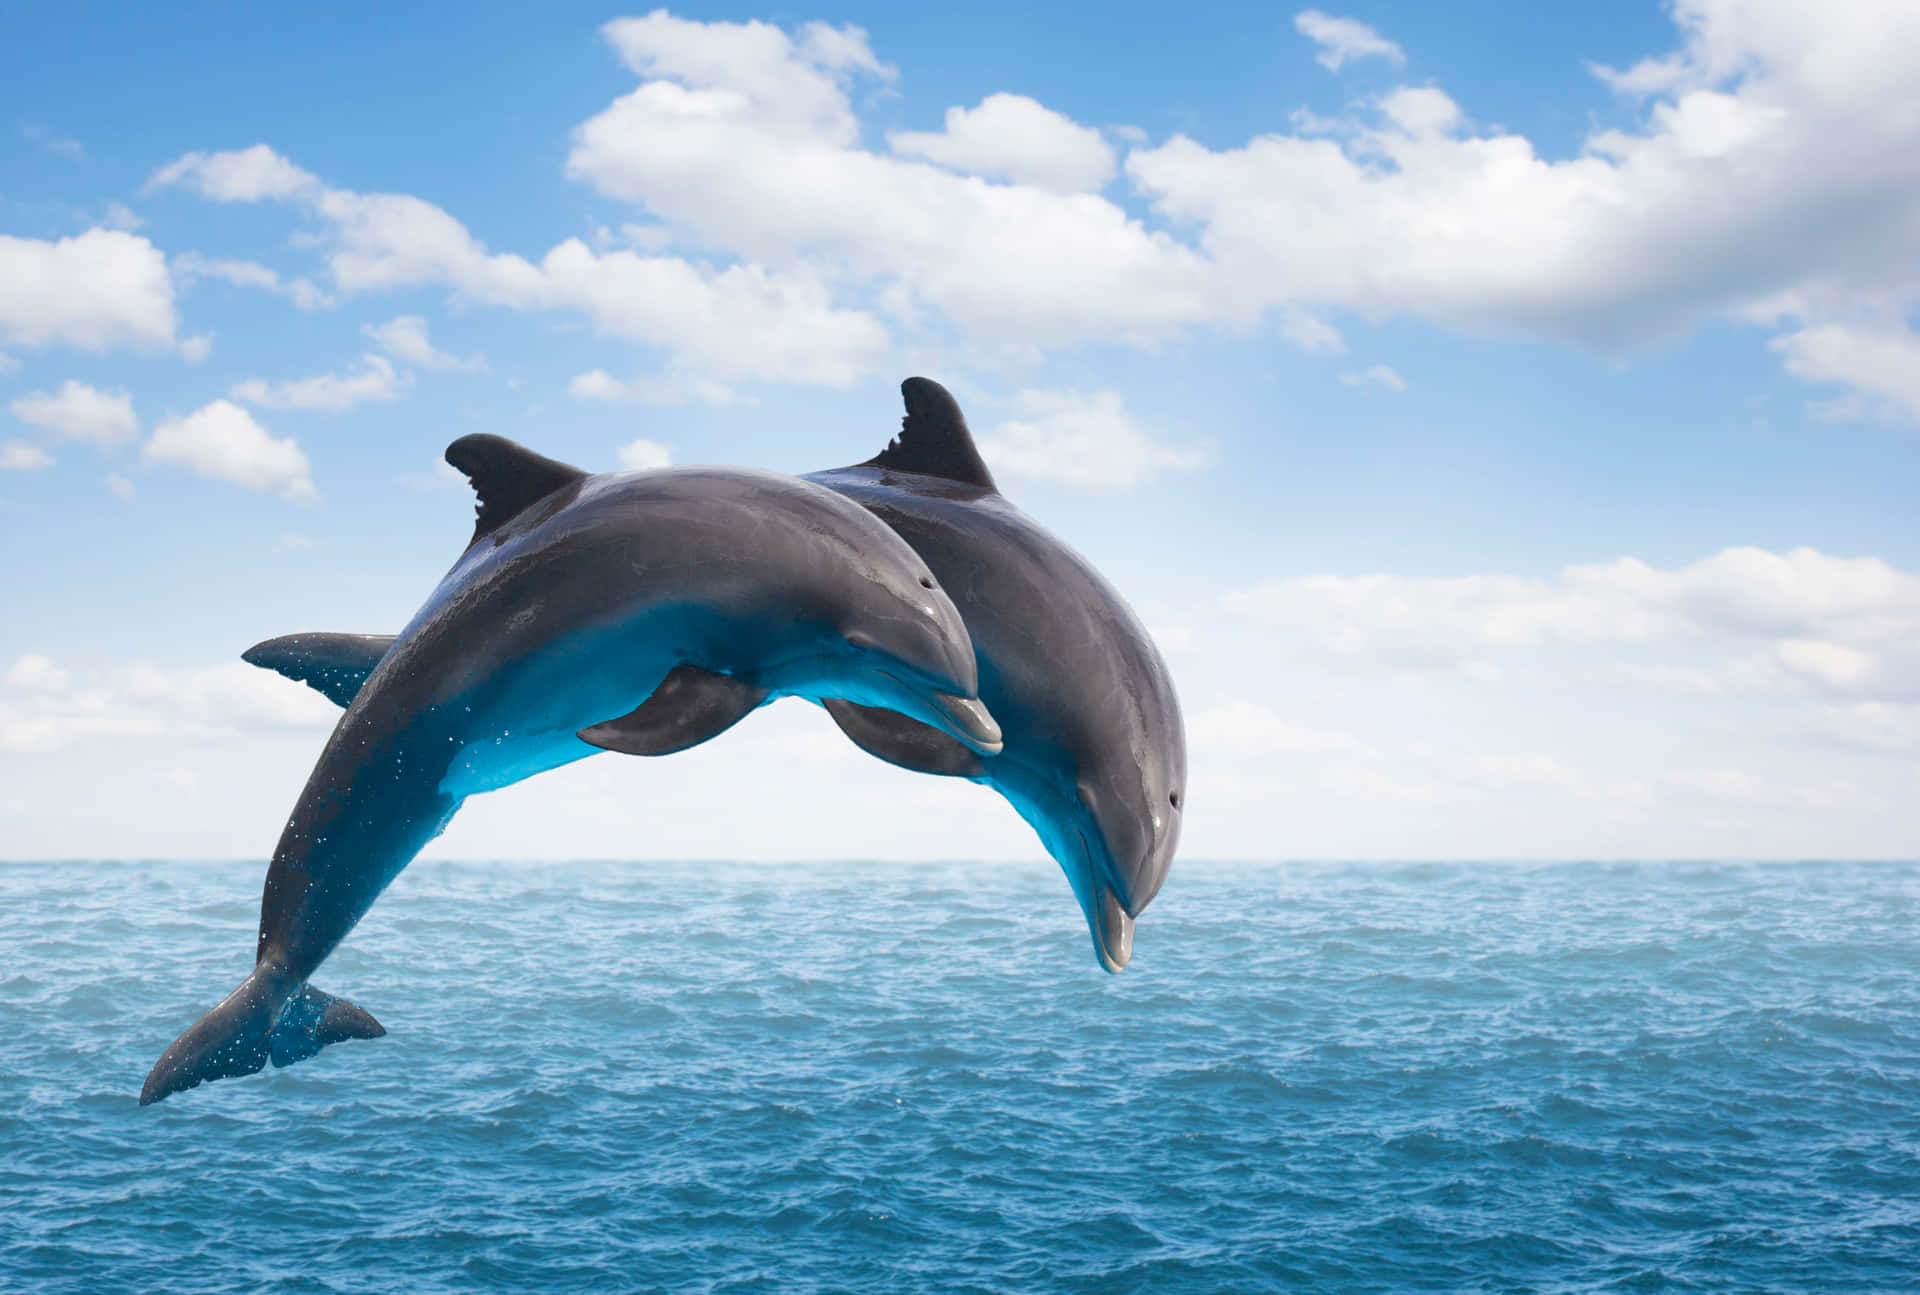 A beautiful dolphin enjoys a swim in the deep blue sea.